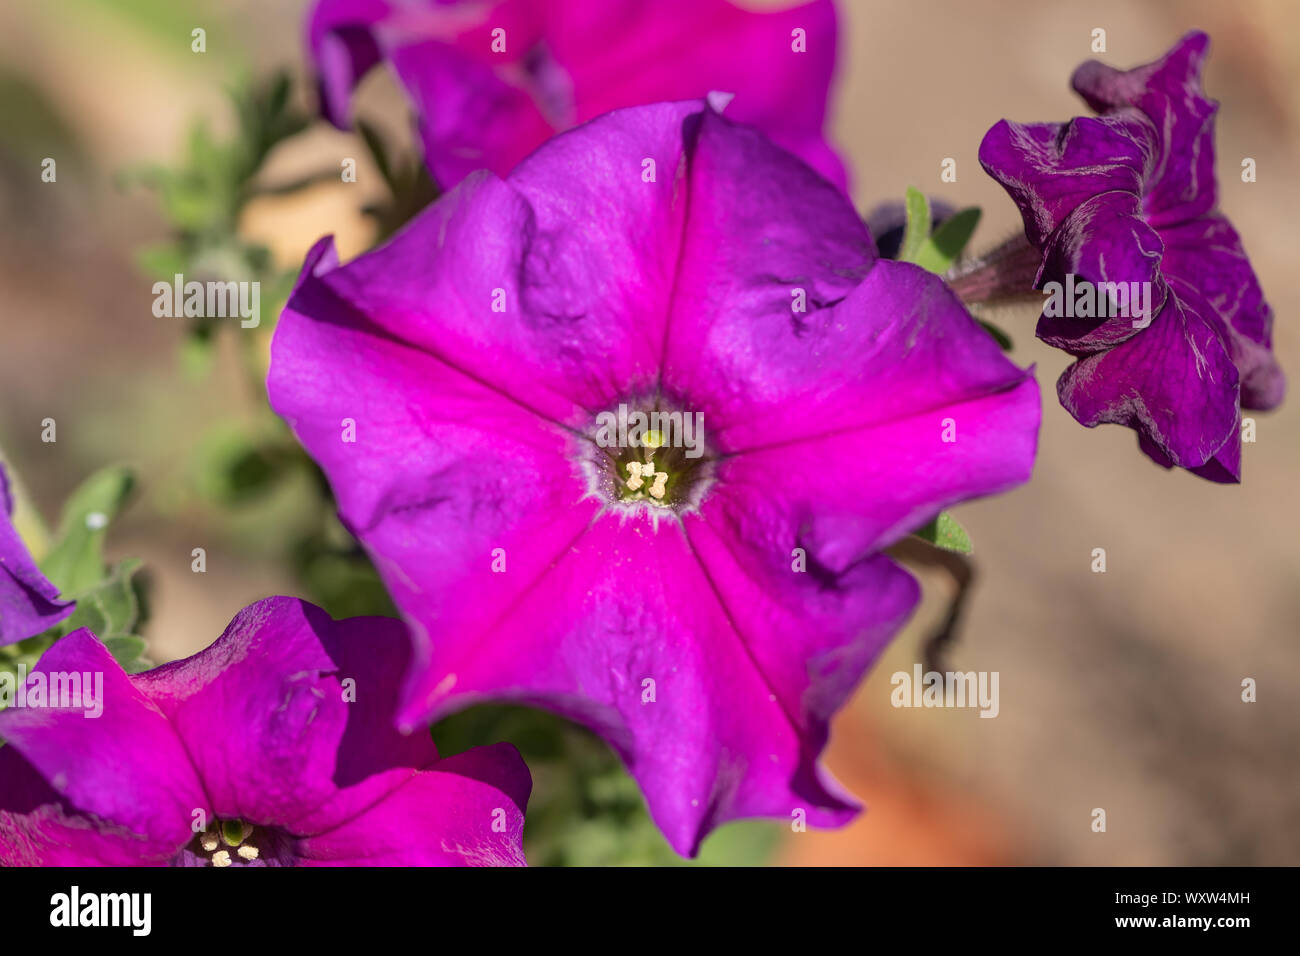 Cultivar pétunia close-up ultra violet Banque D'Images